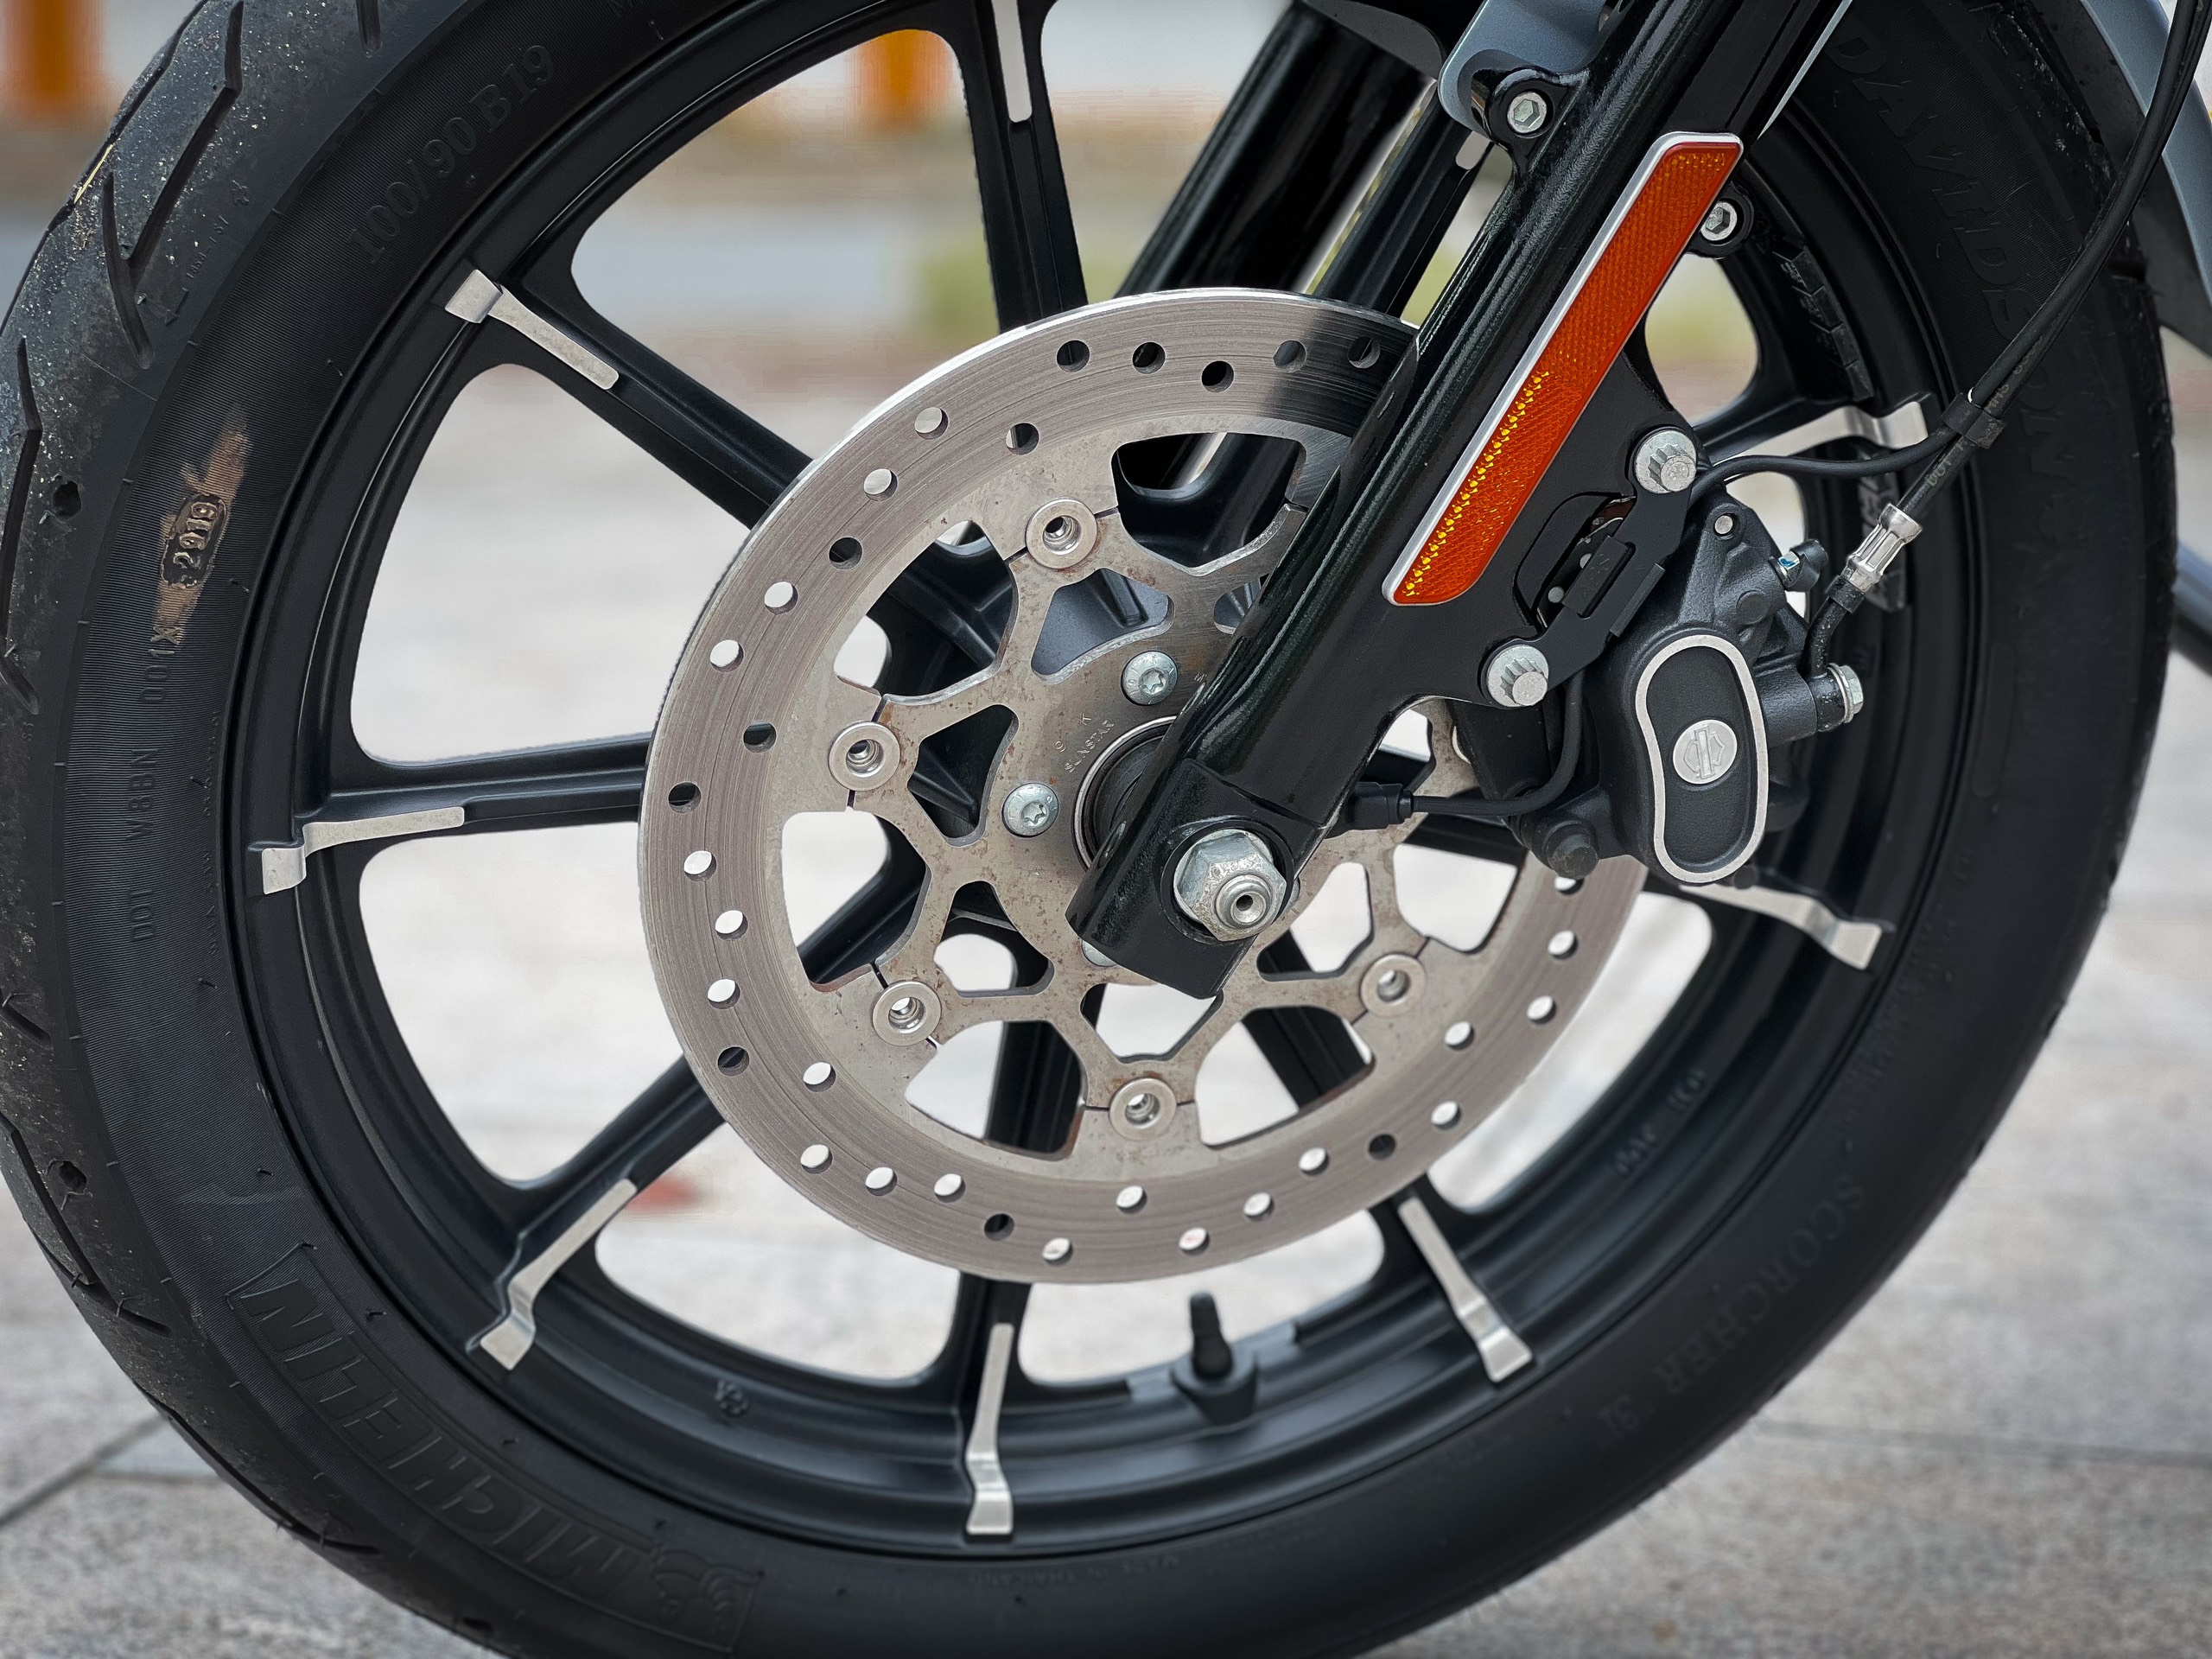 Harley Davidson Sportster Iron 883 Model 2019